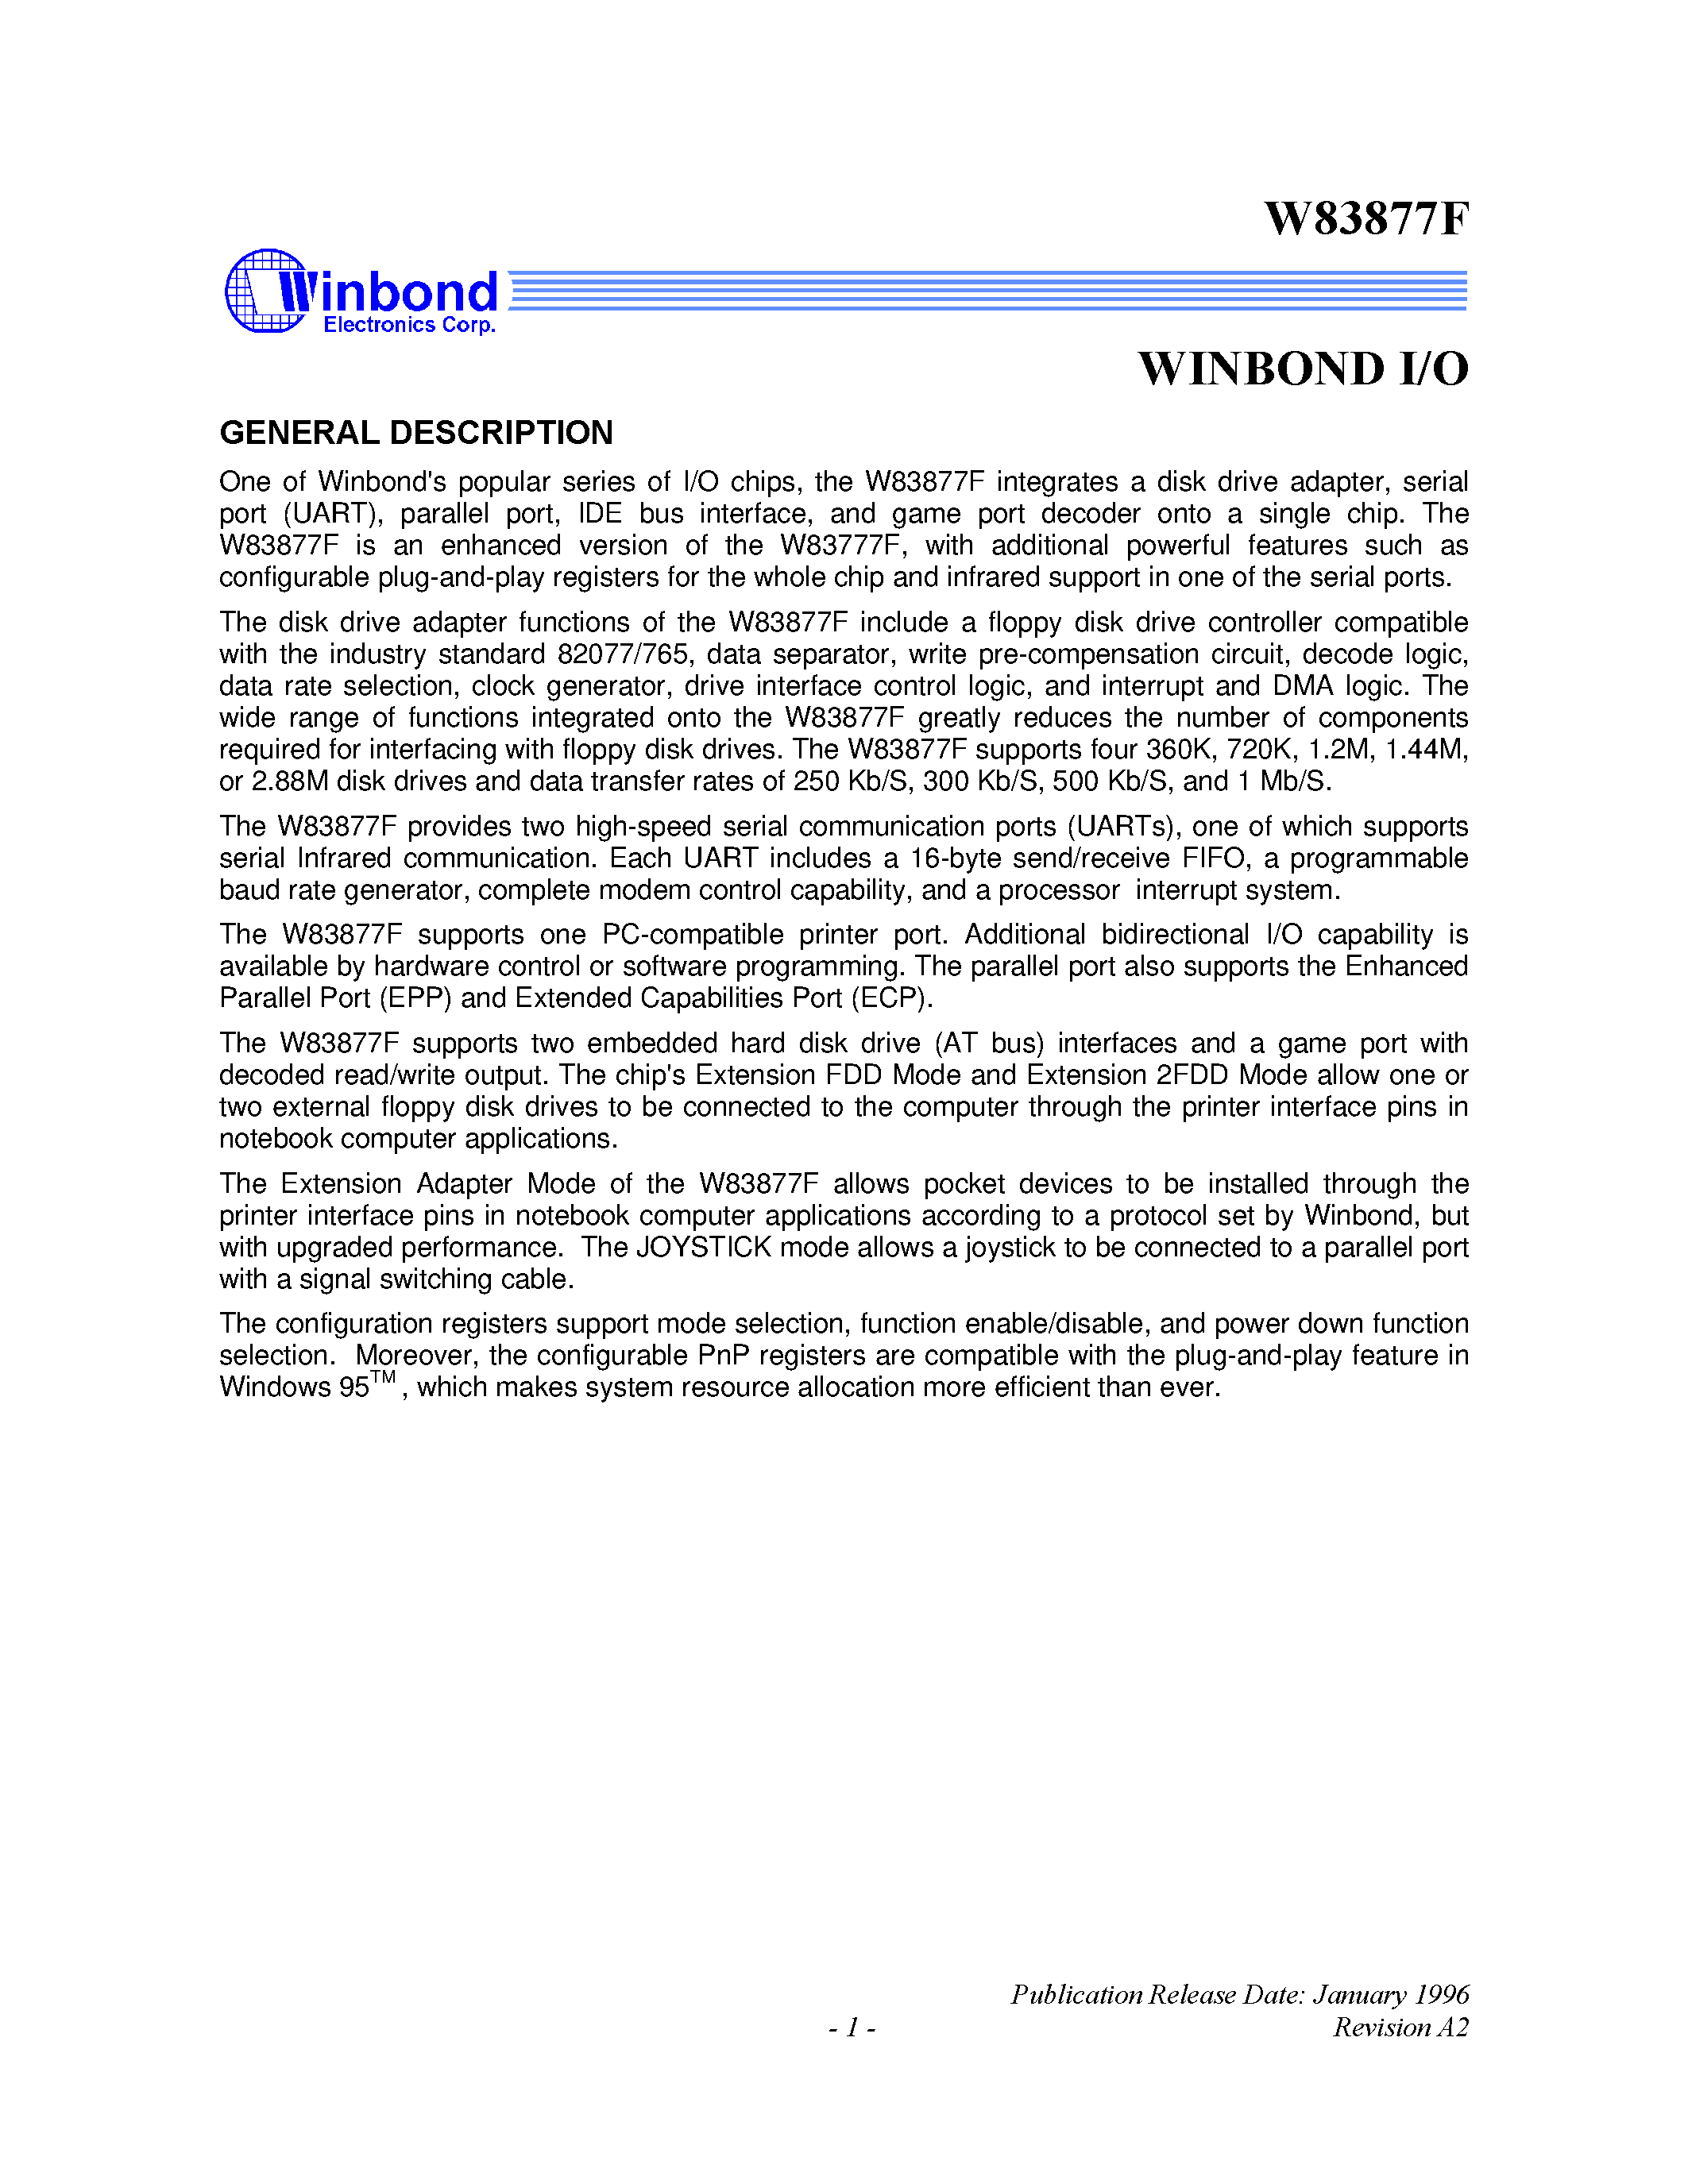 Даташит W83877 - WINBOND I/O страница 1